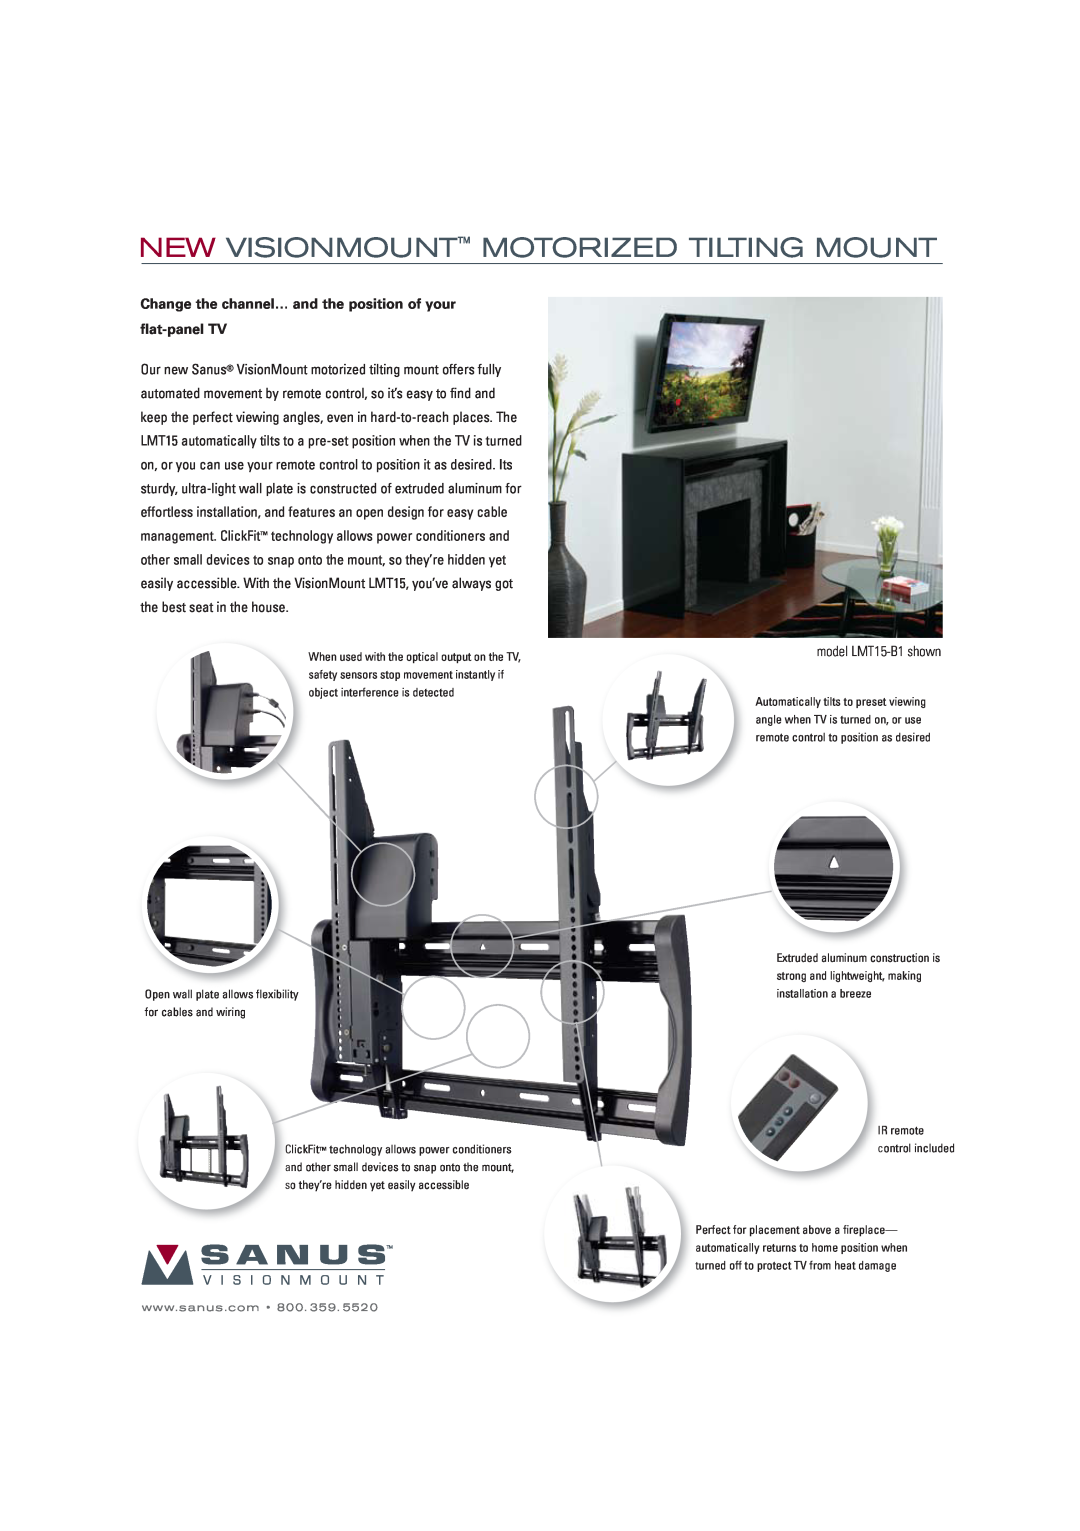 Sanus Systems manual New Visionmount Motorized Tilting Mount, model LMT15-B1 shown 